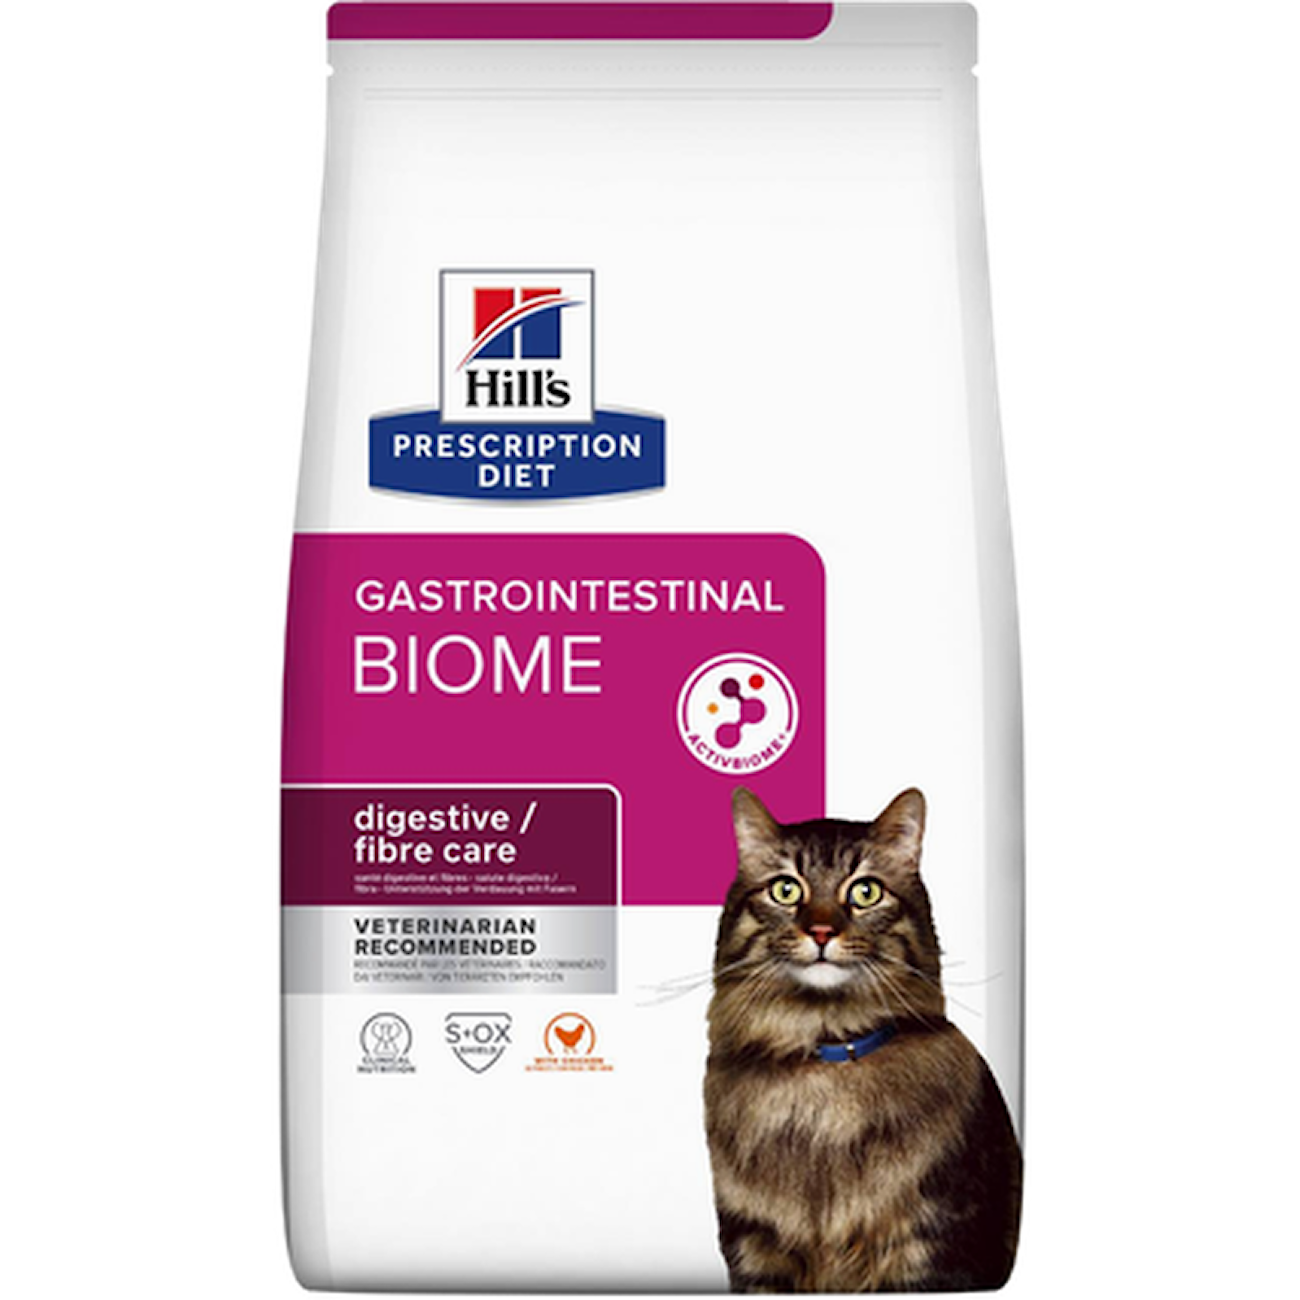 Gastrointestinal Biome Digestive/Fibre Care Chicken - Dry Cat Food